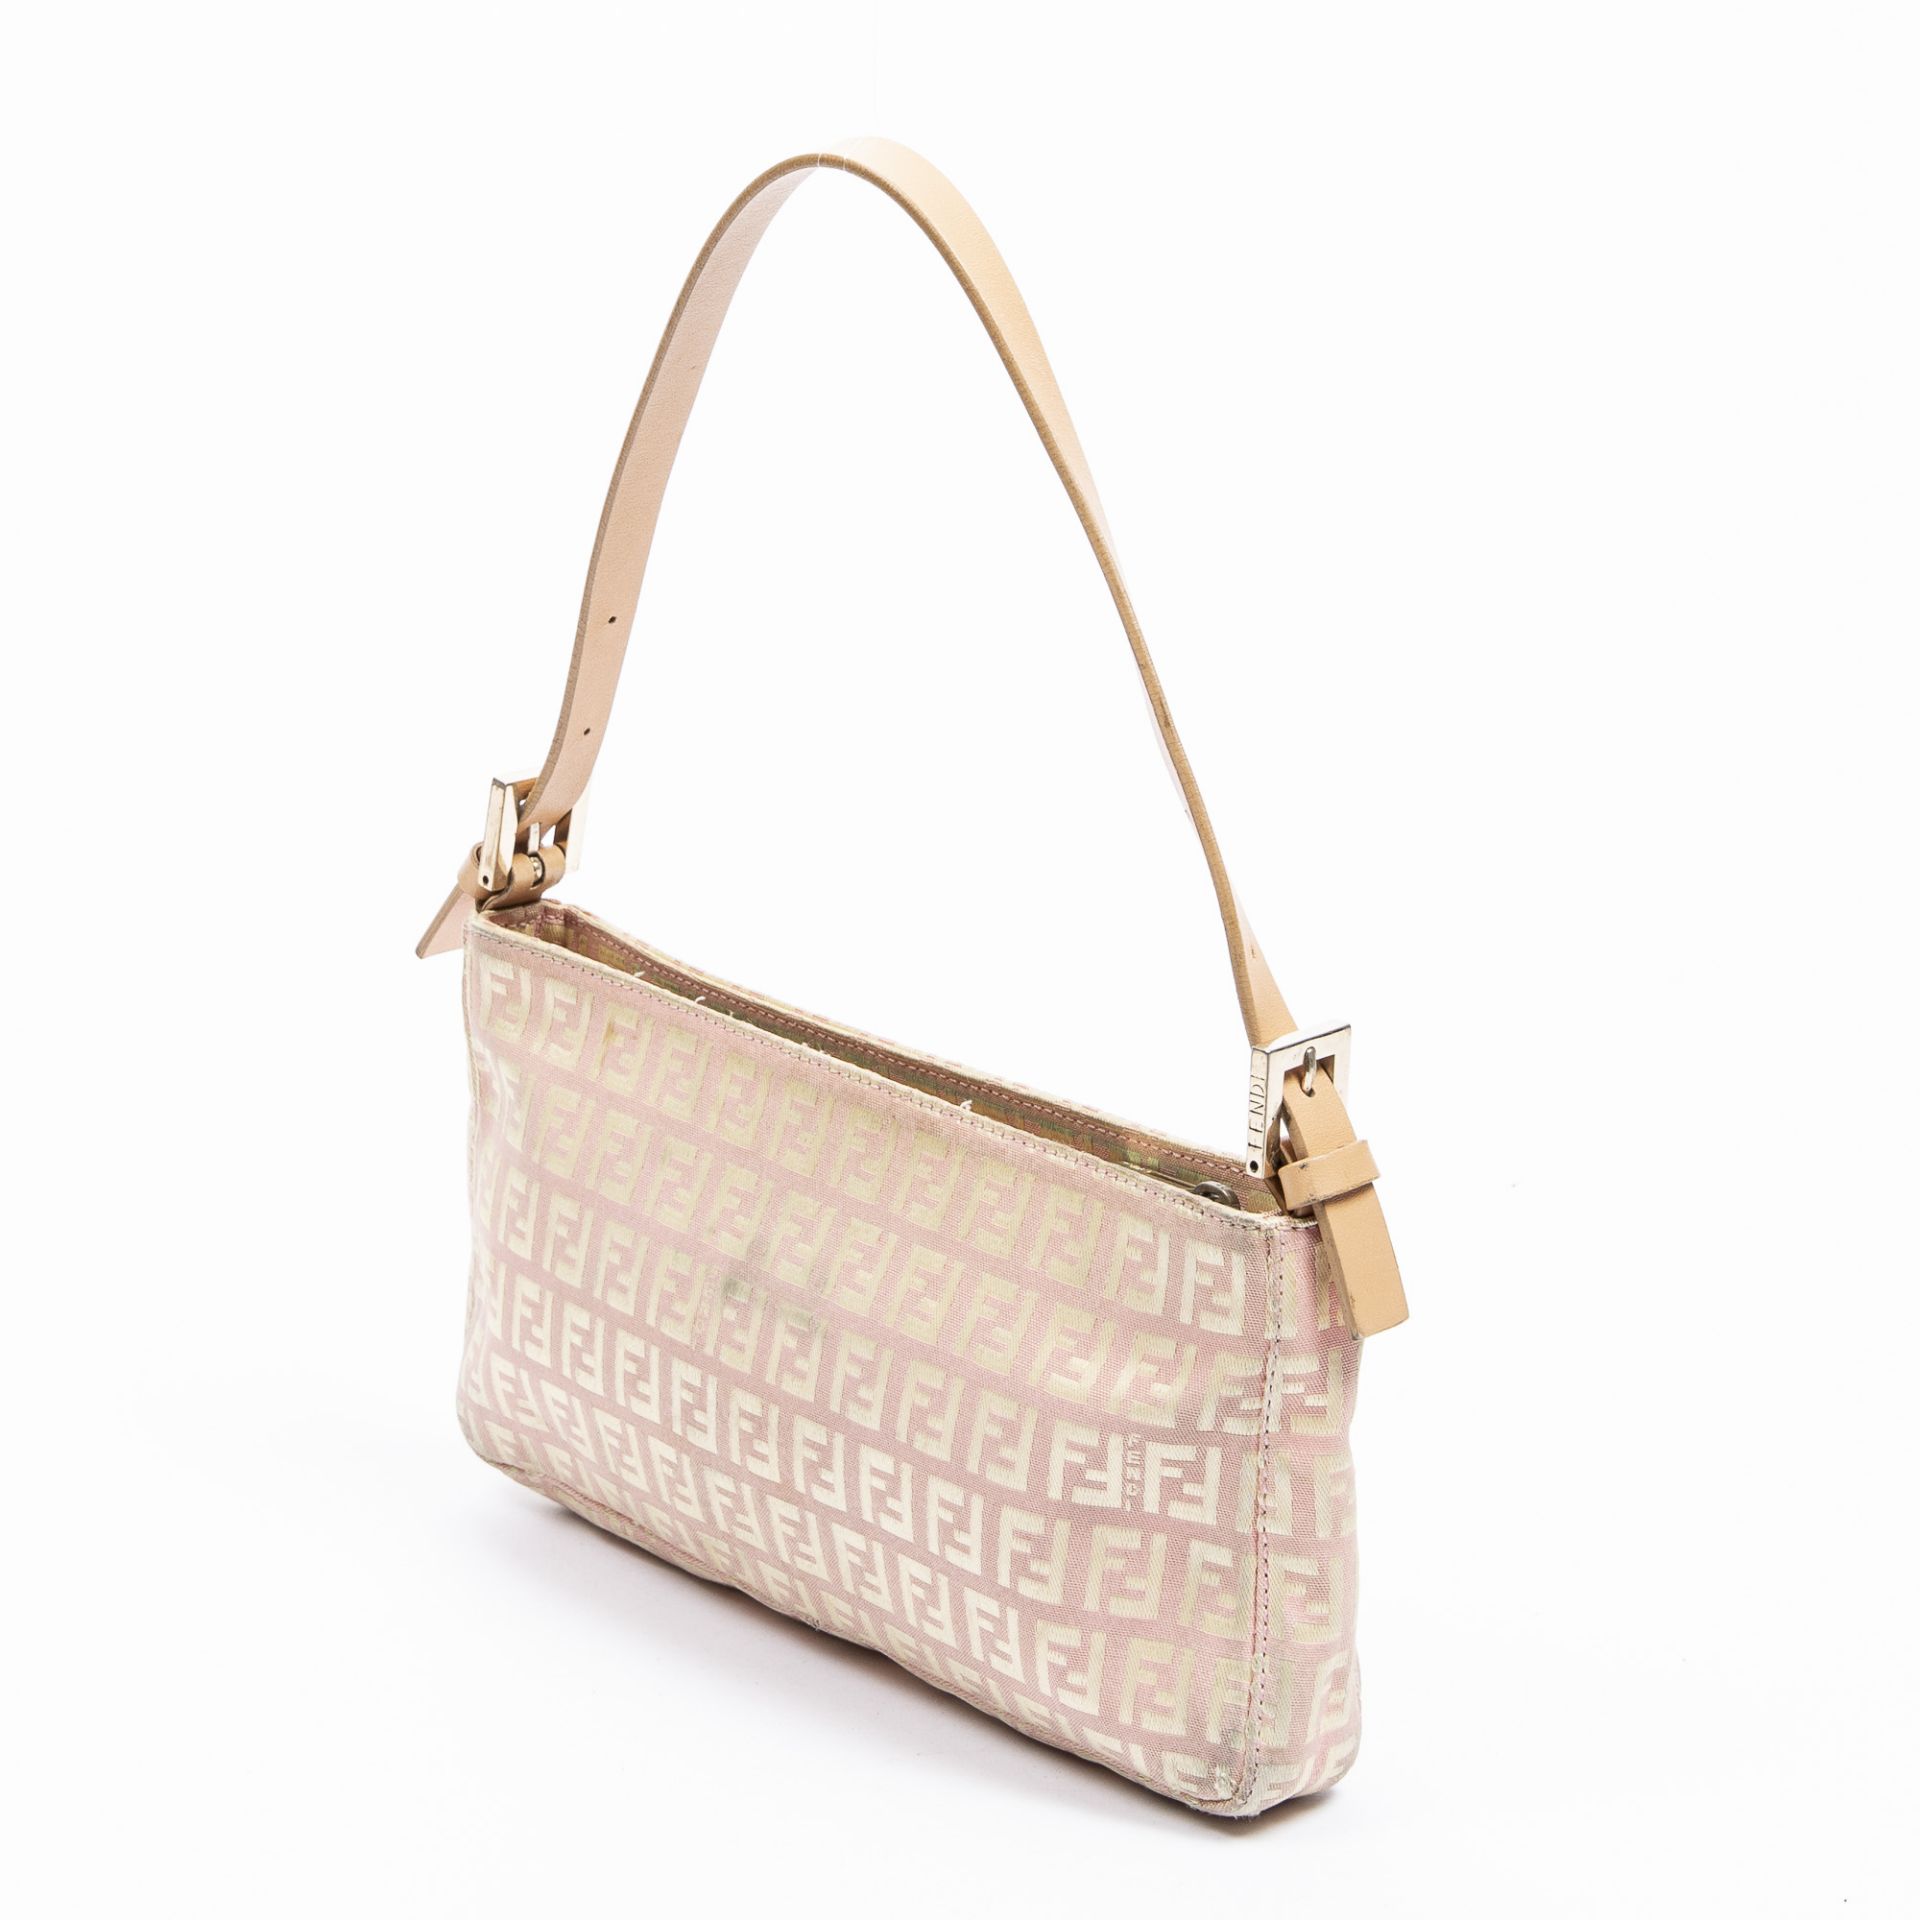 RRP £820.00 Lot To Contain 1 Fendi Canvas Pochette Bag Handbag In Light Pink/Beige - 25*13*3cm - - Image 2 of 4